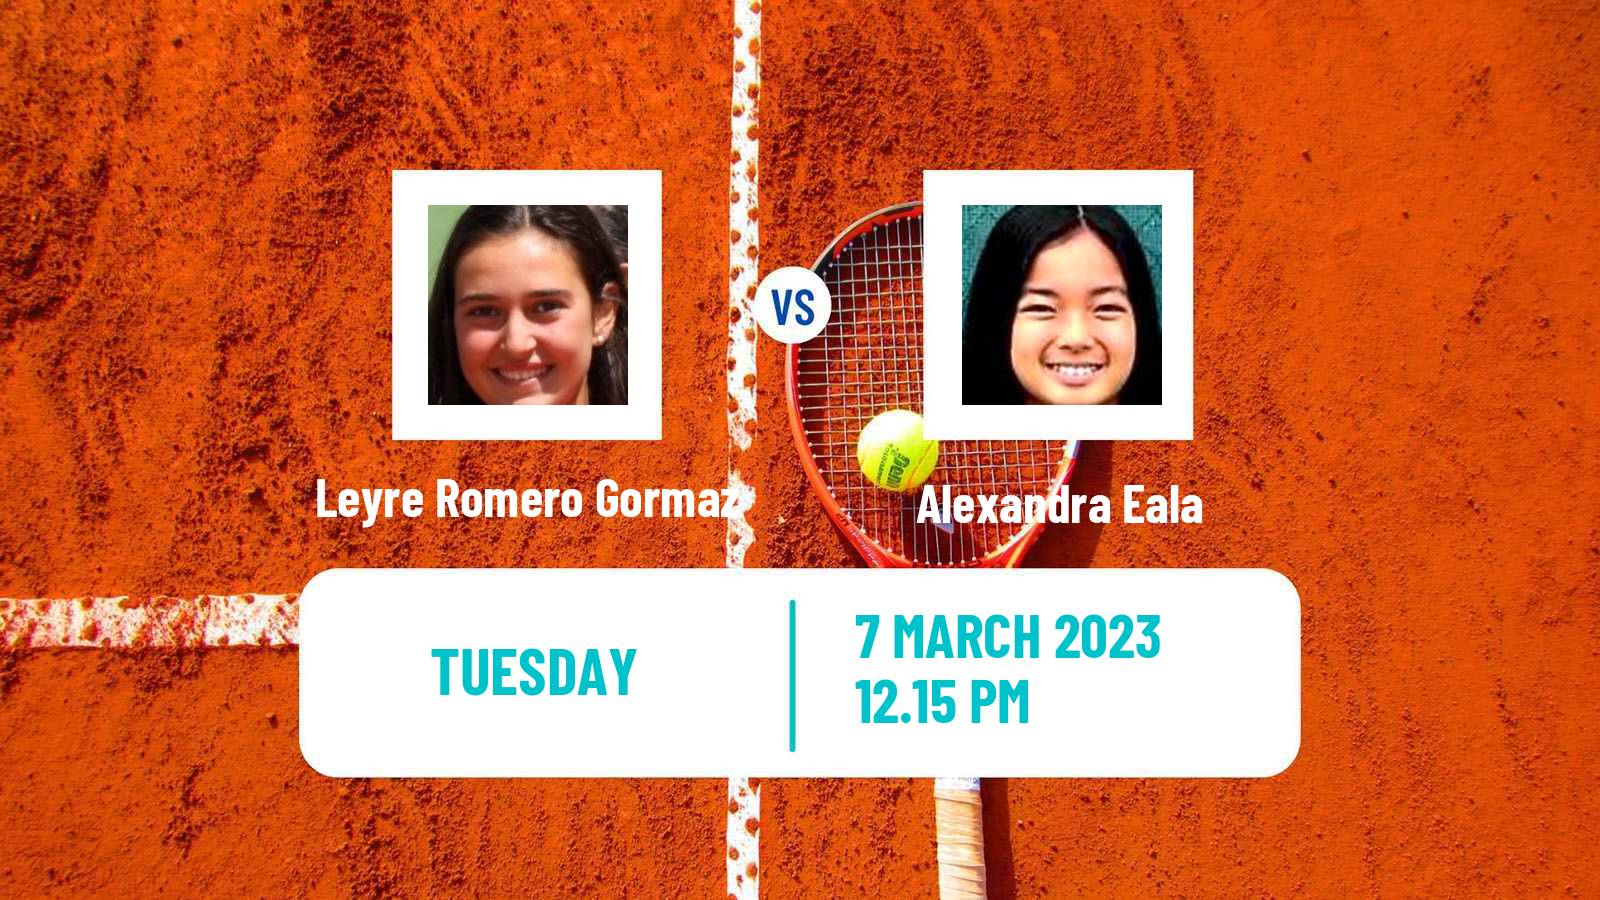 Tennis ITF Tournaments Leyre Romero Gormaz - Alexandra Eala